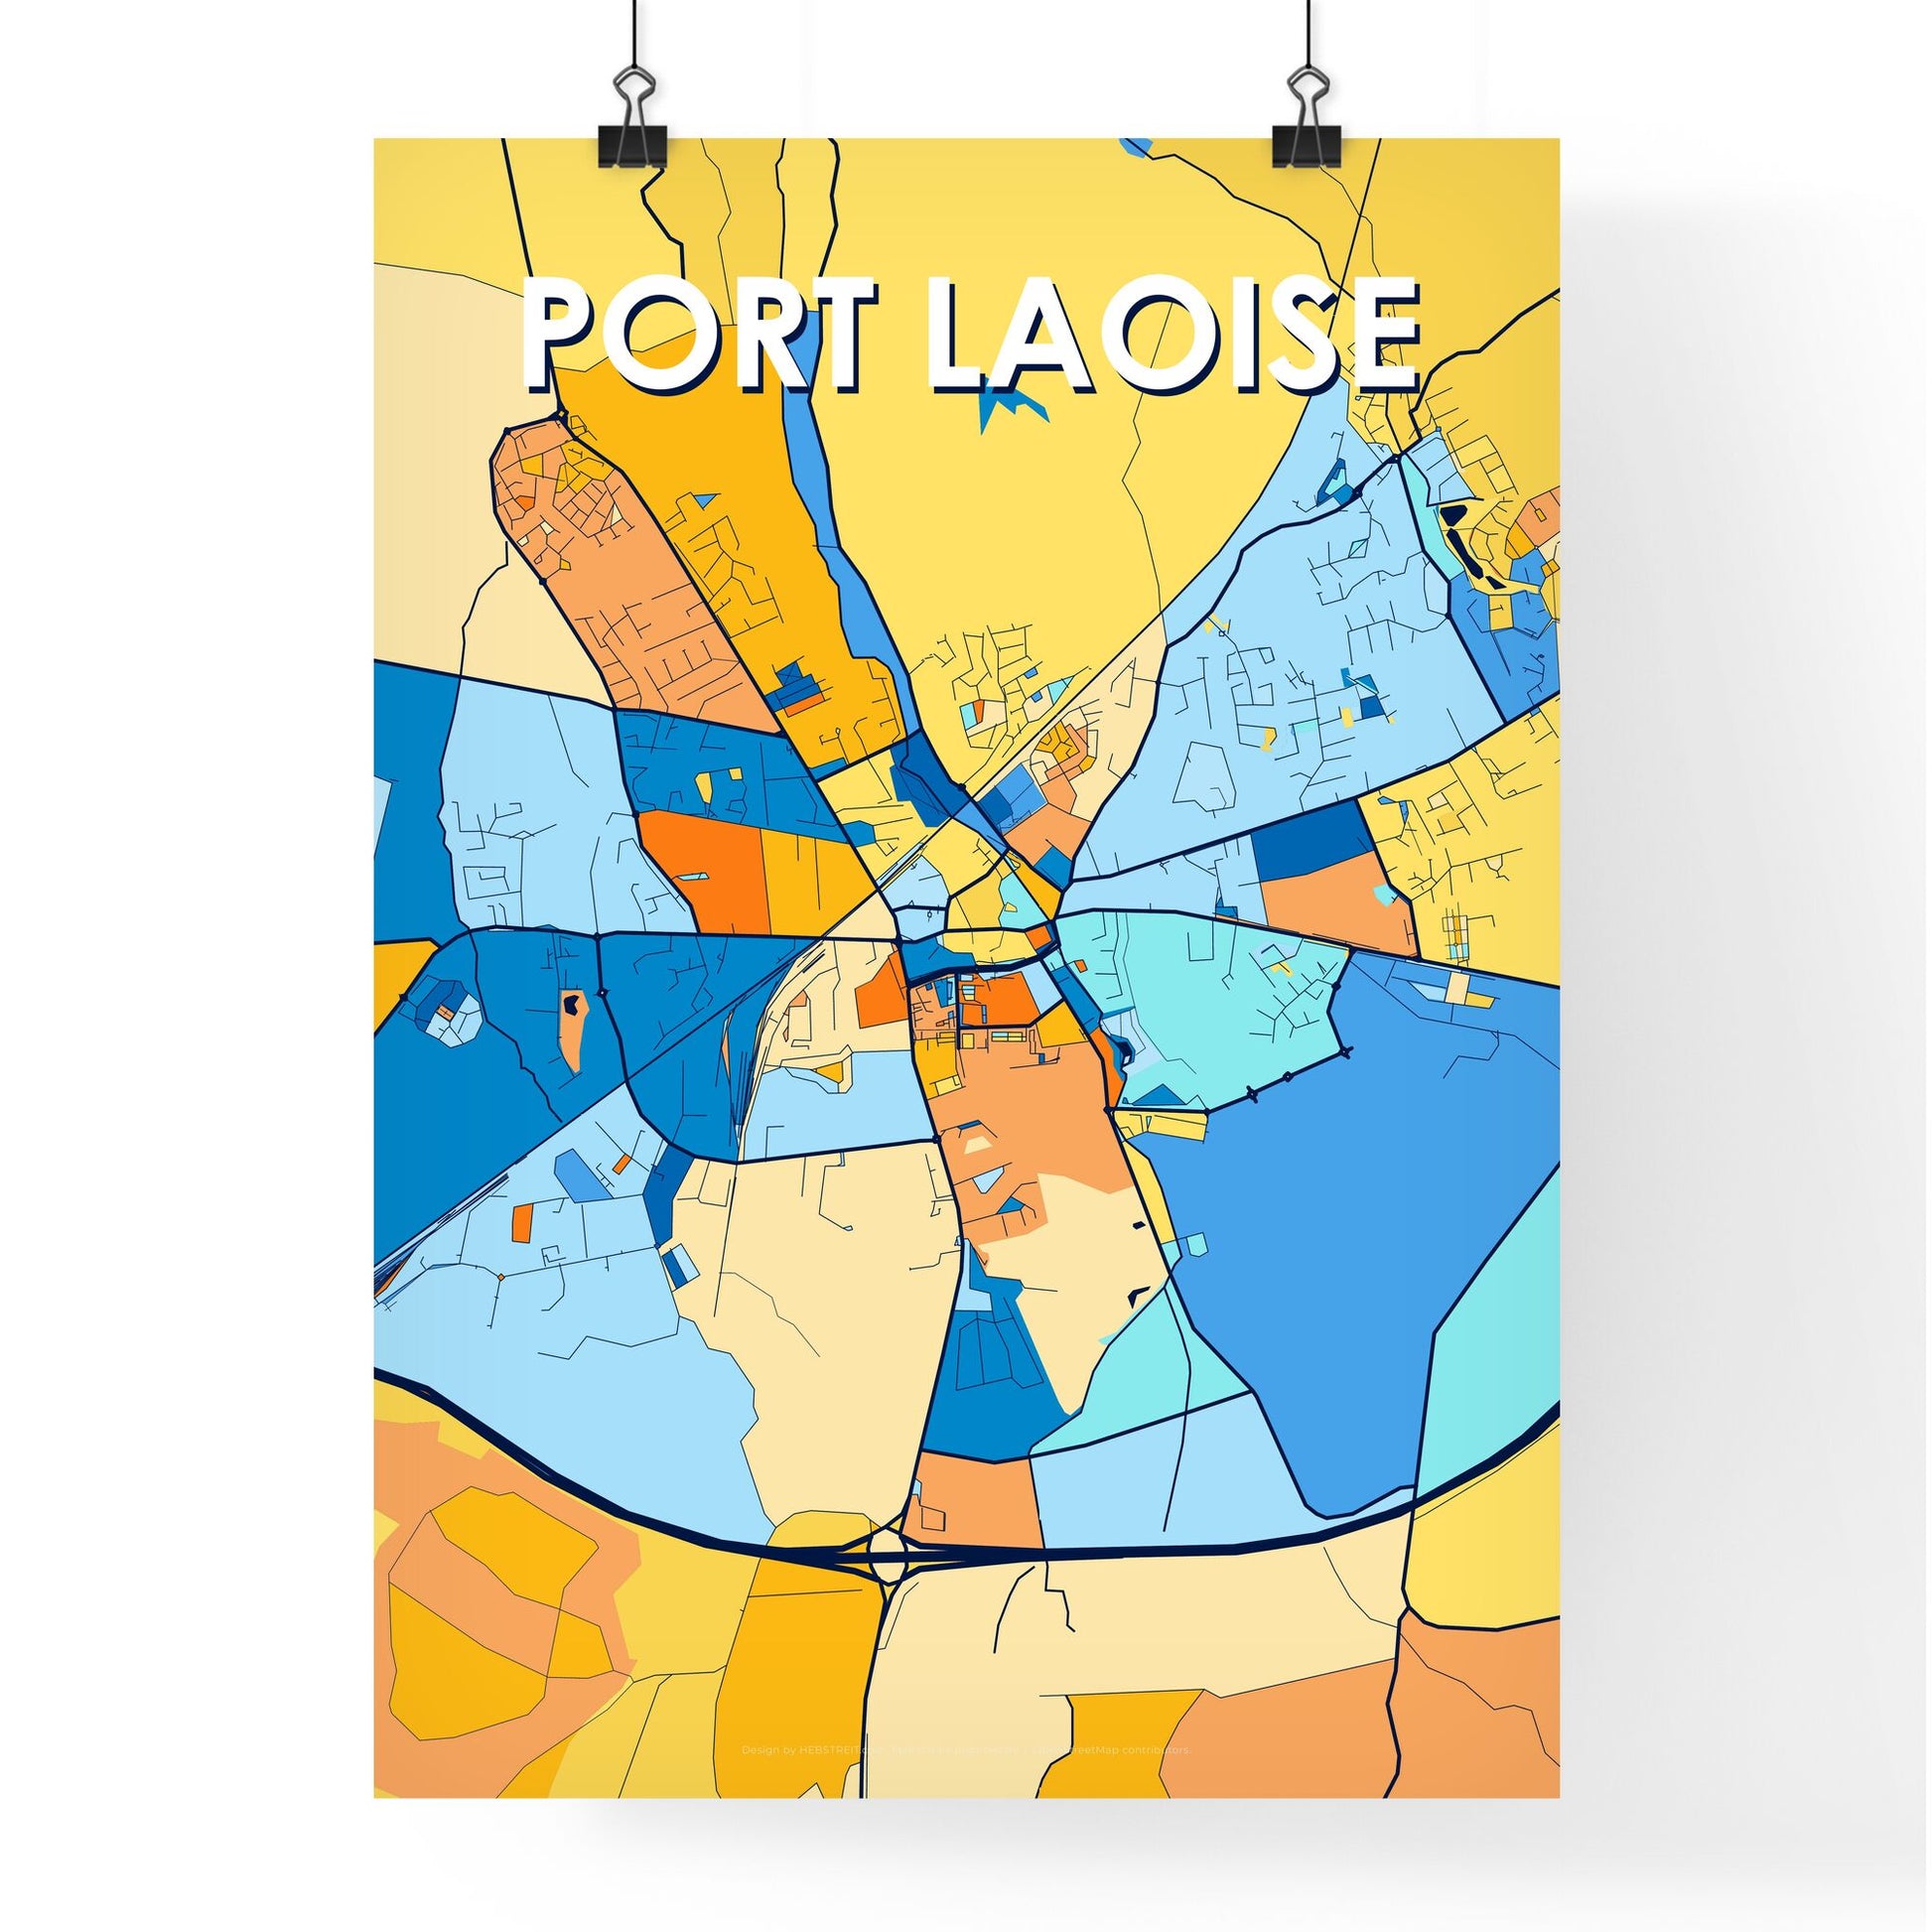 PORT LAOISE IRELAND Vibrant Colorful Art Map Poster Blue Orange